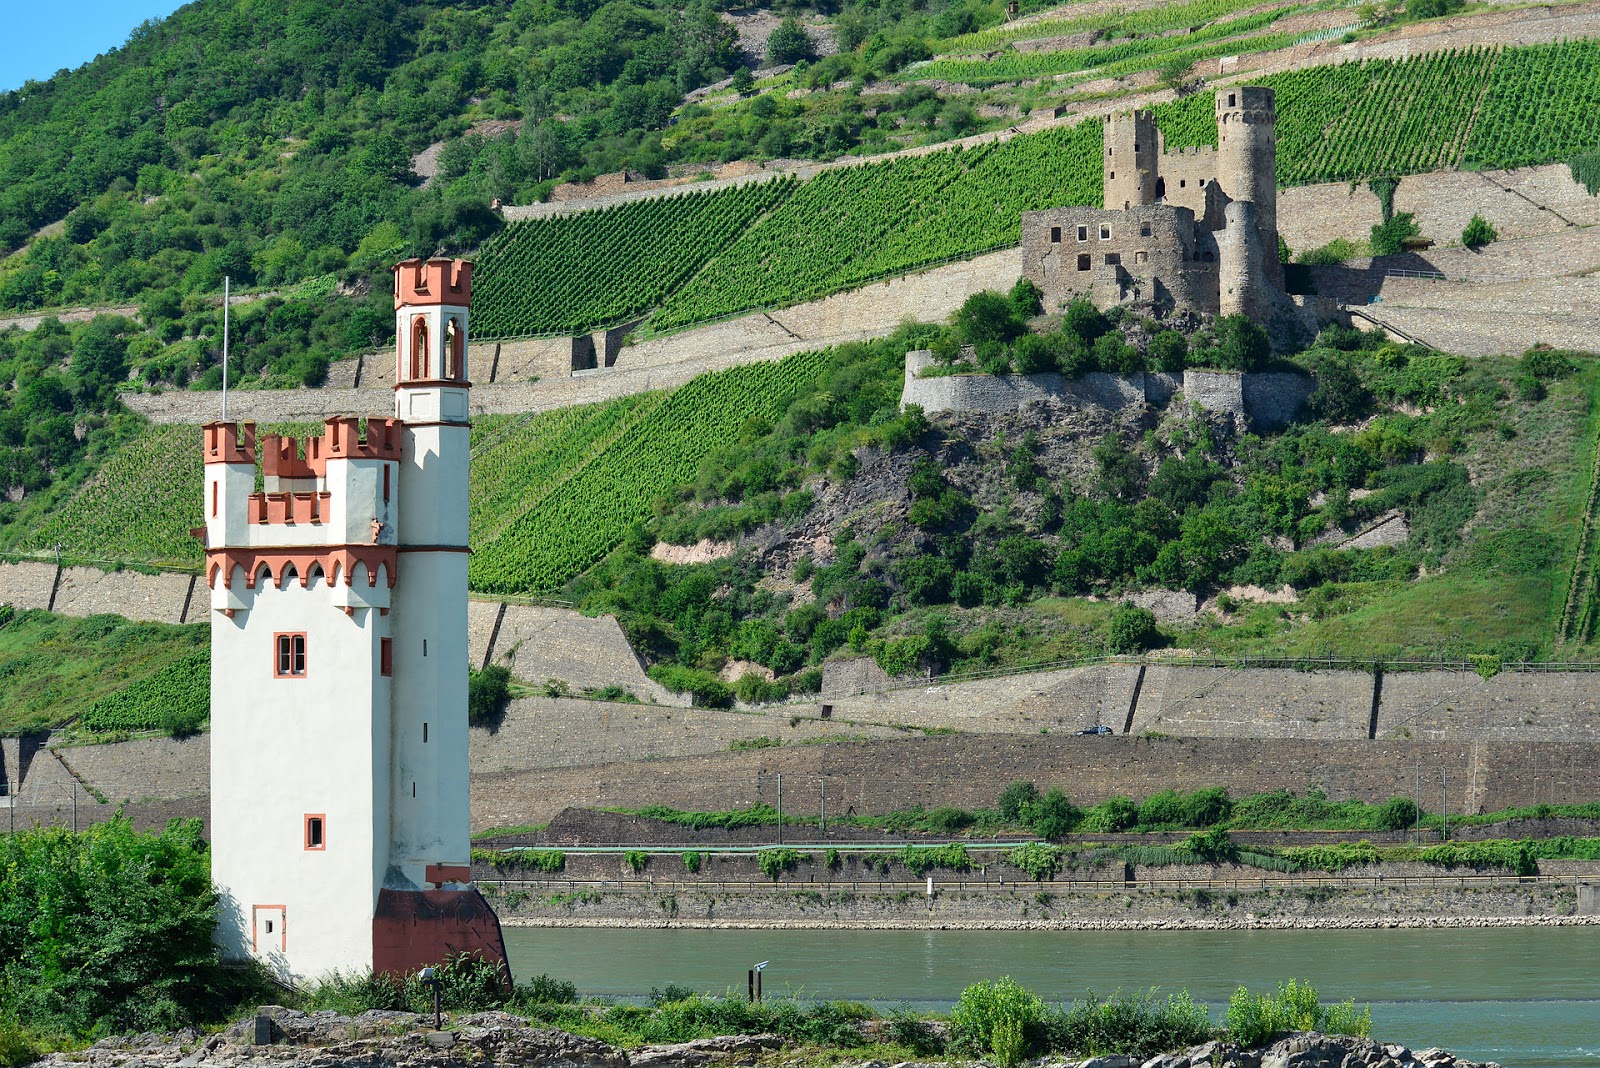 Retro Kimmer S Blog The Amazing Eltz Castle In Germany